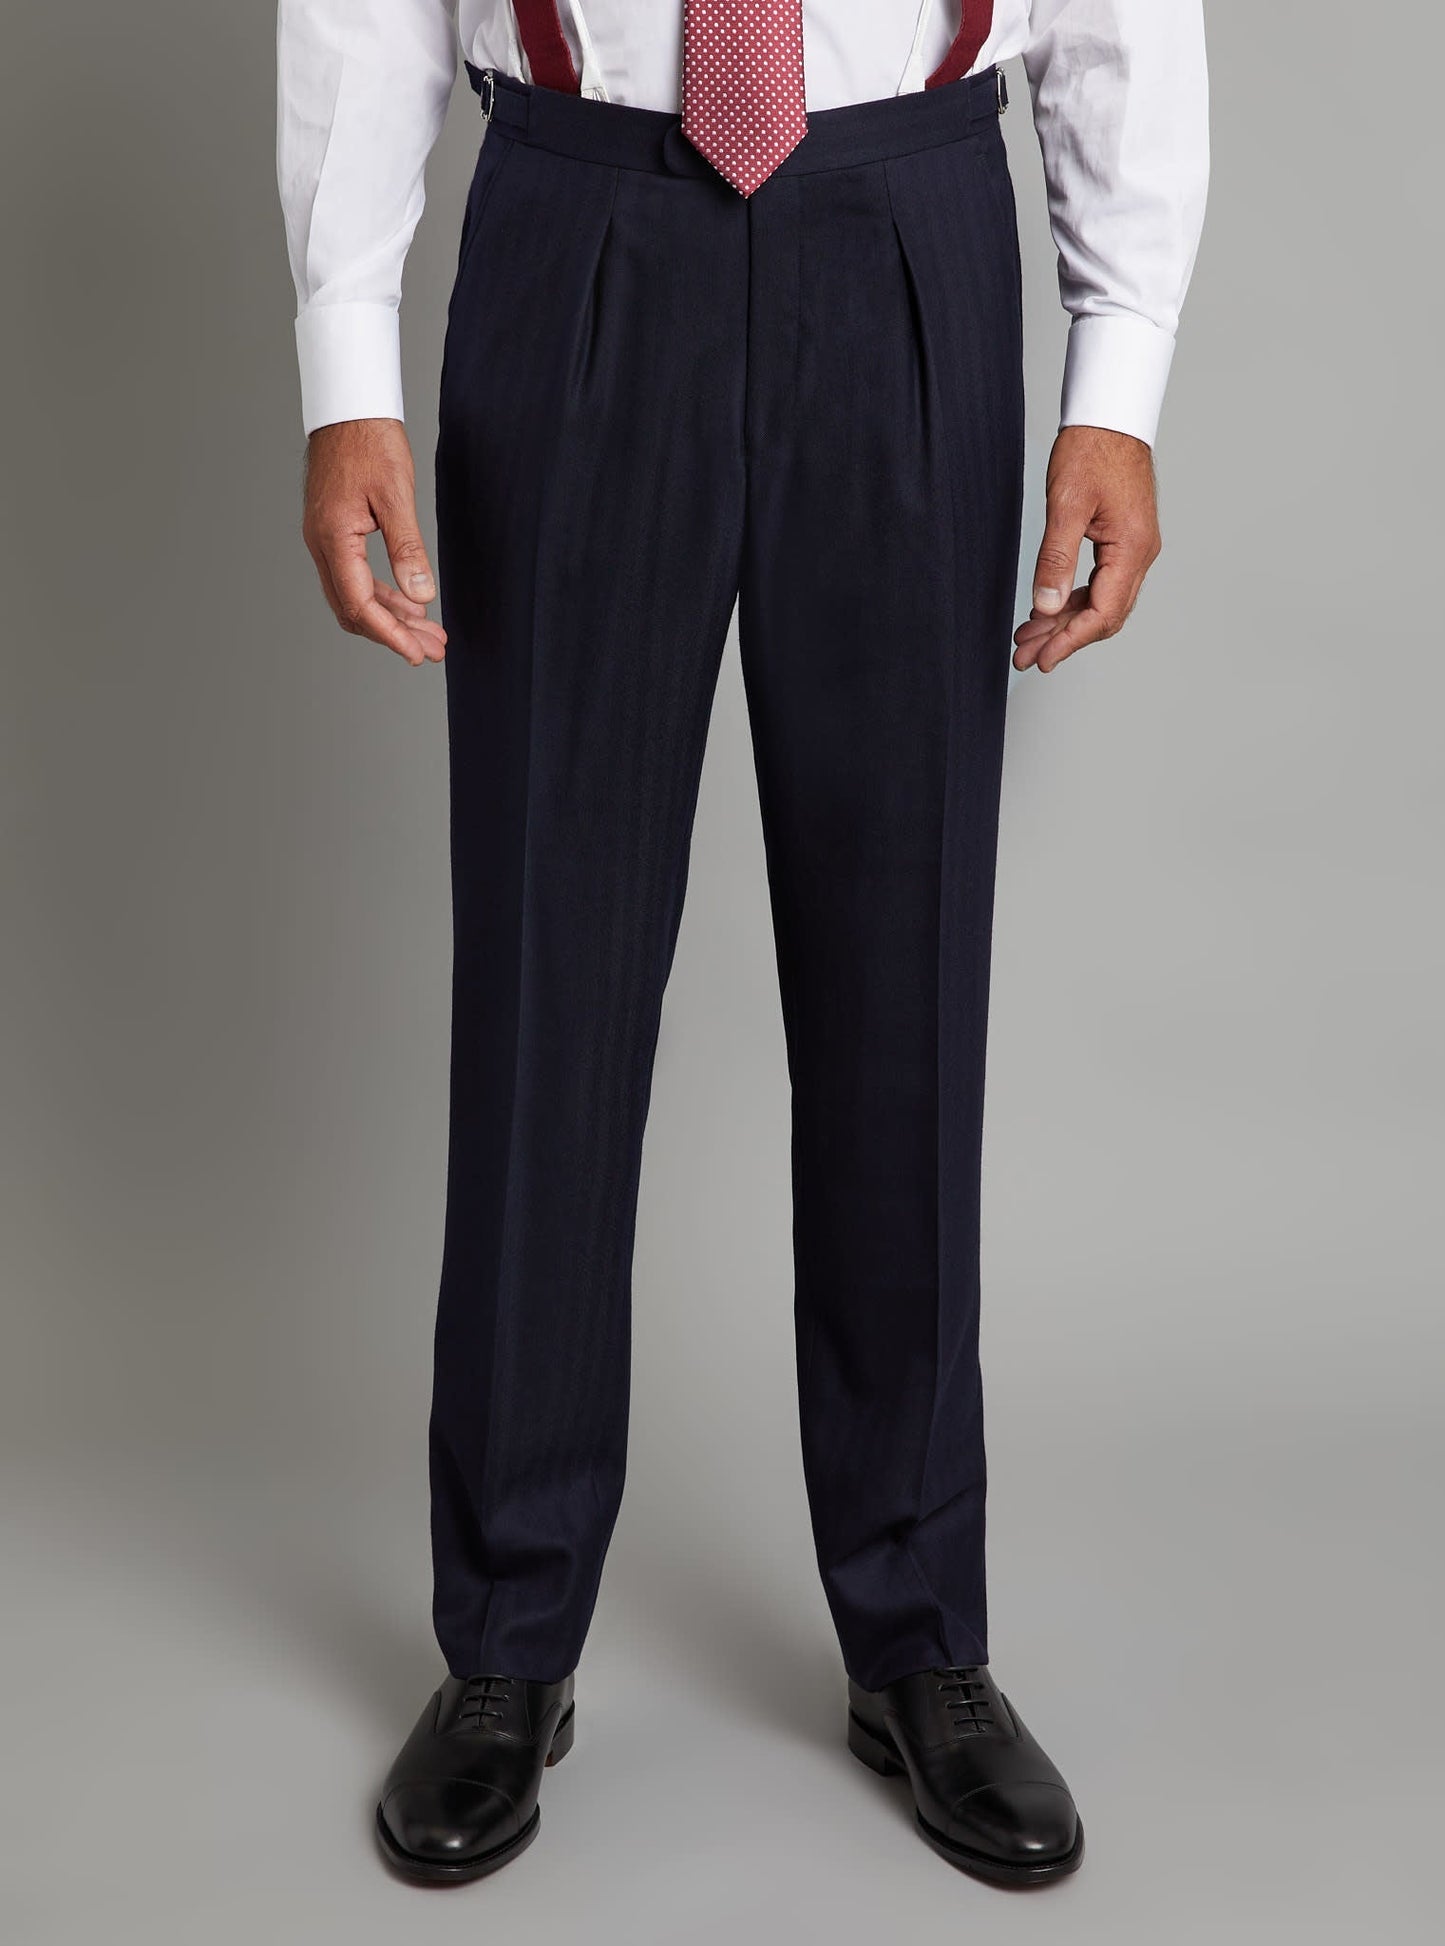 Eaton Suit - Navy Herringbone